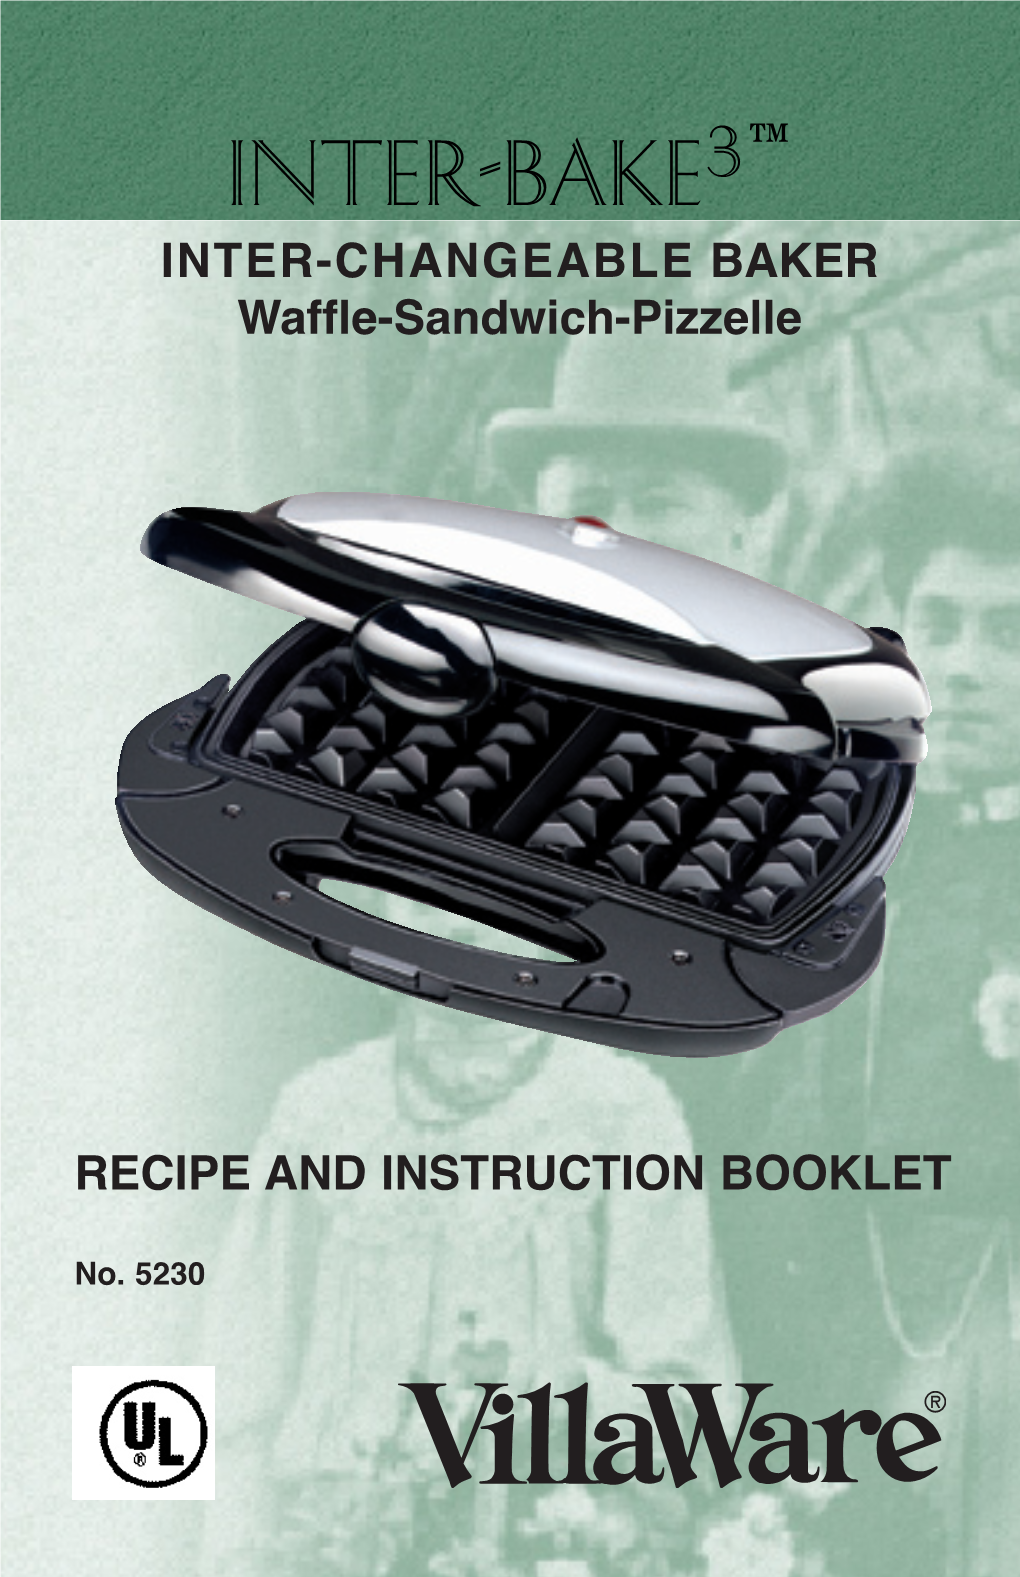 Inter-Bake3™ INTER-CHANGEABLE BAKER Waffle-Sandwich-Pizzelle